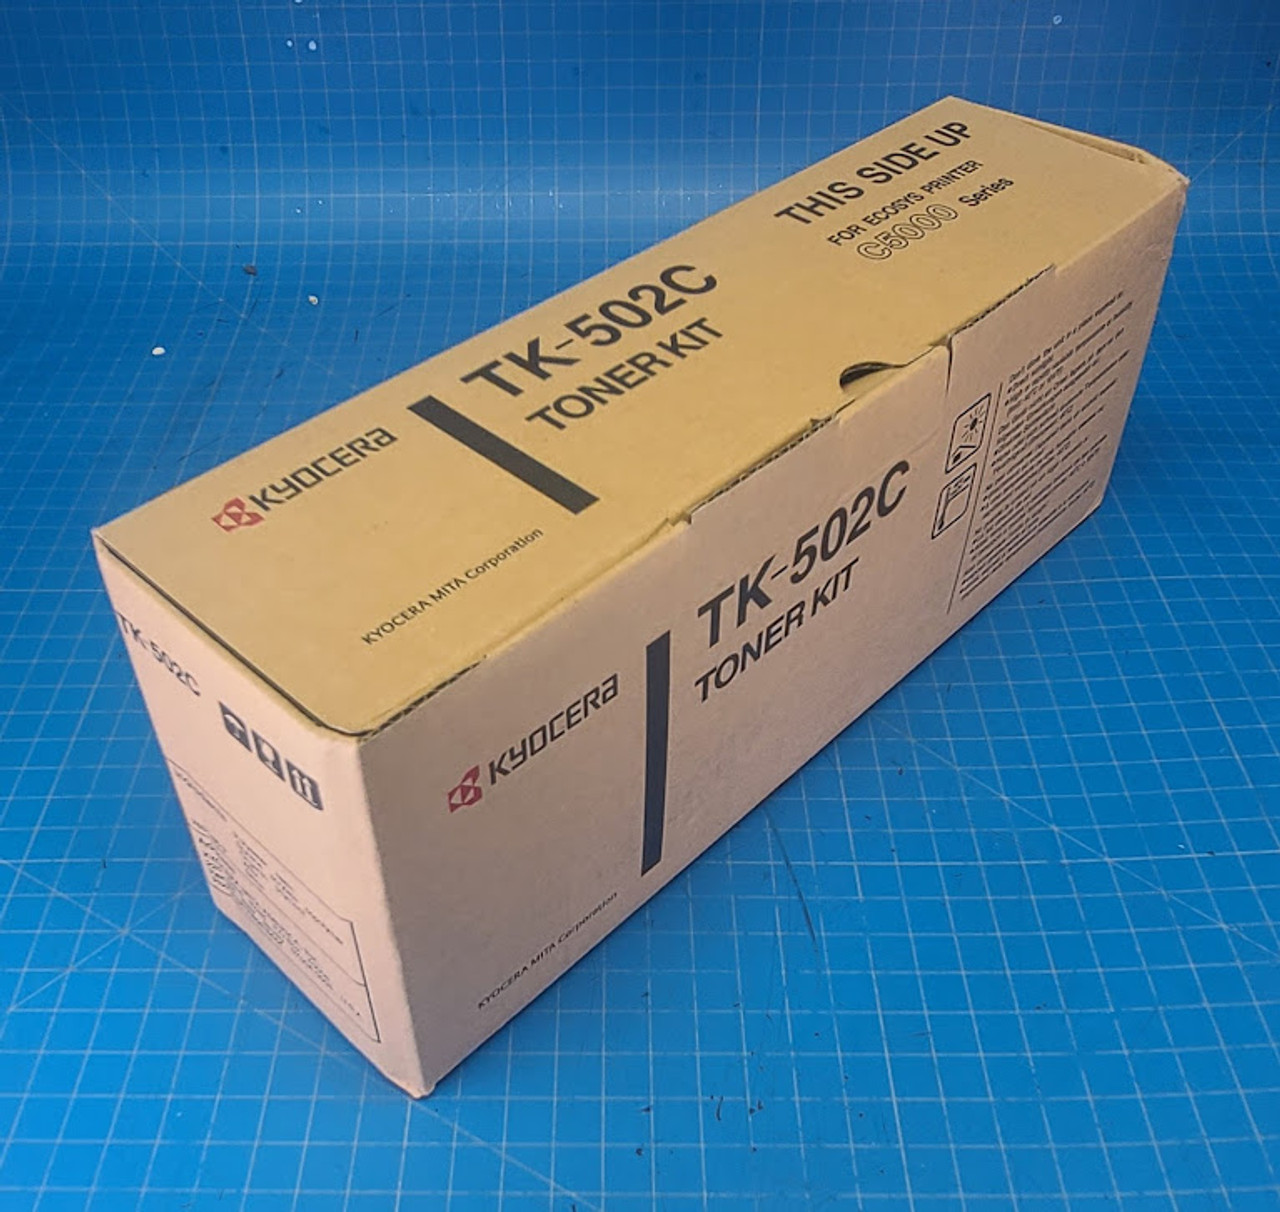 Kyocera FS-C5016 Toner Kit Cyan TK-502C